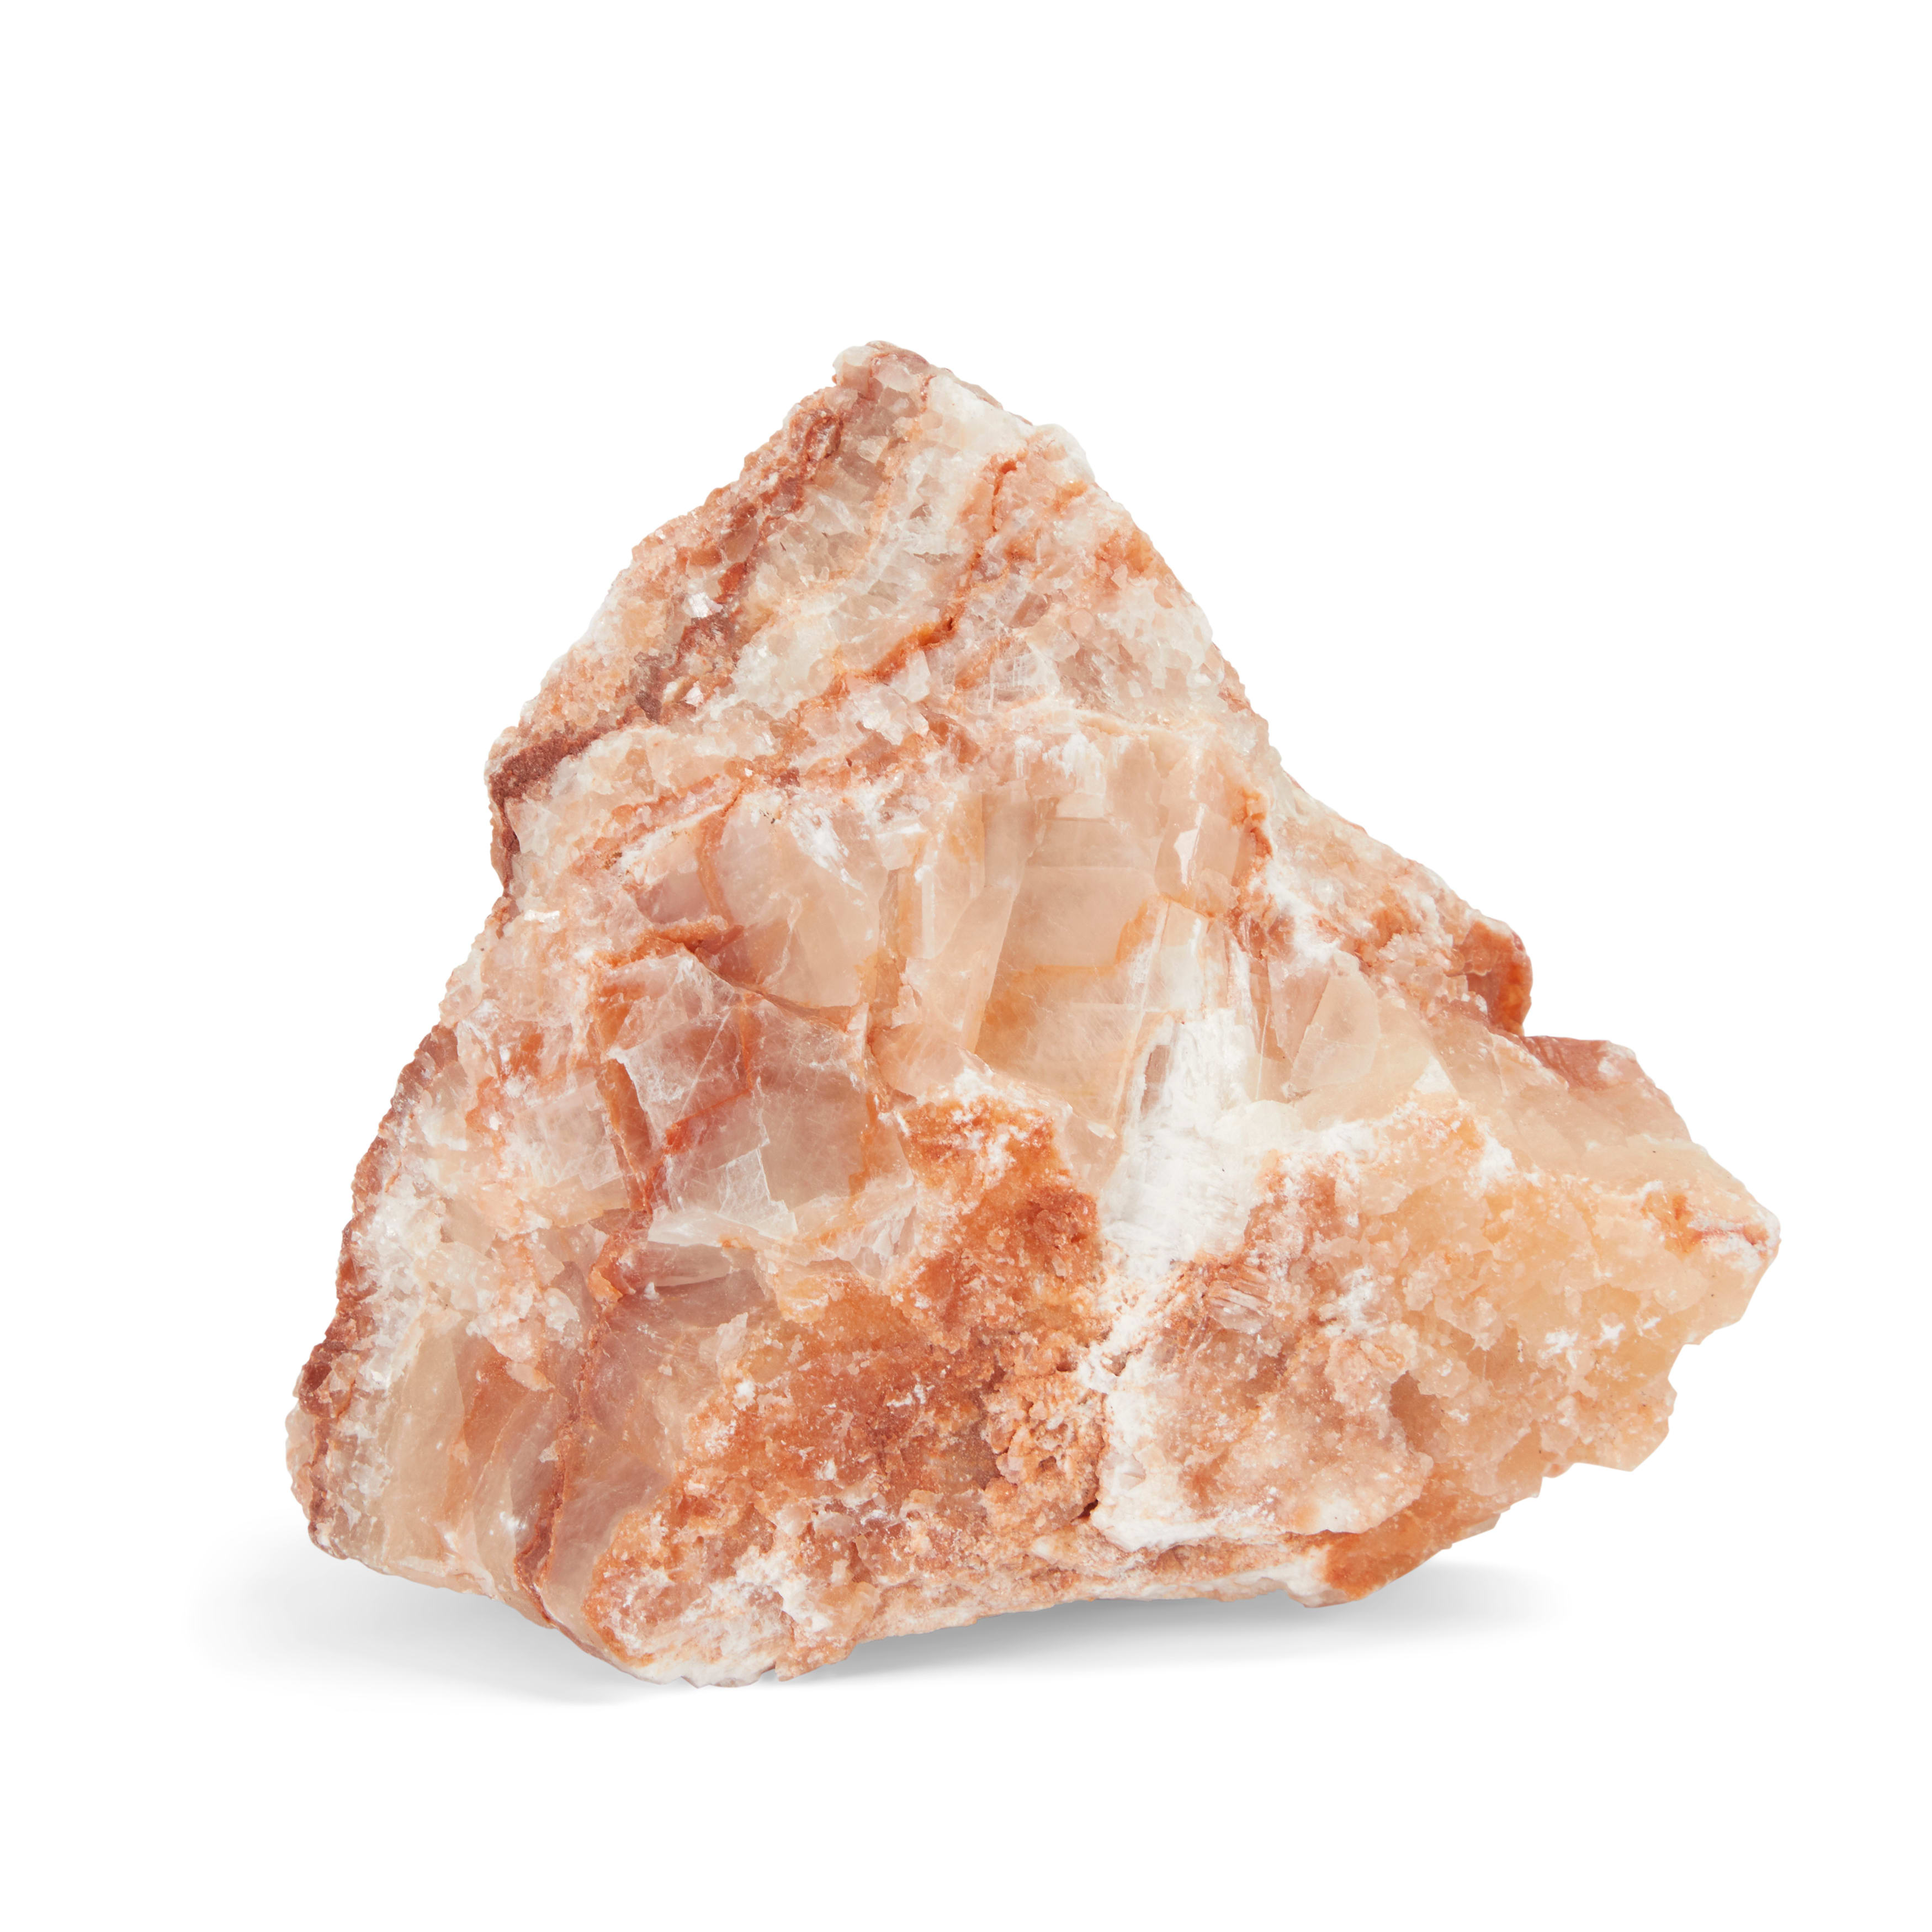 100-150g Natural Amethyst Cluster Druzy Geode Quartz Crystal